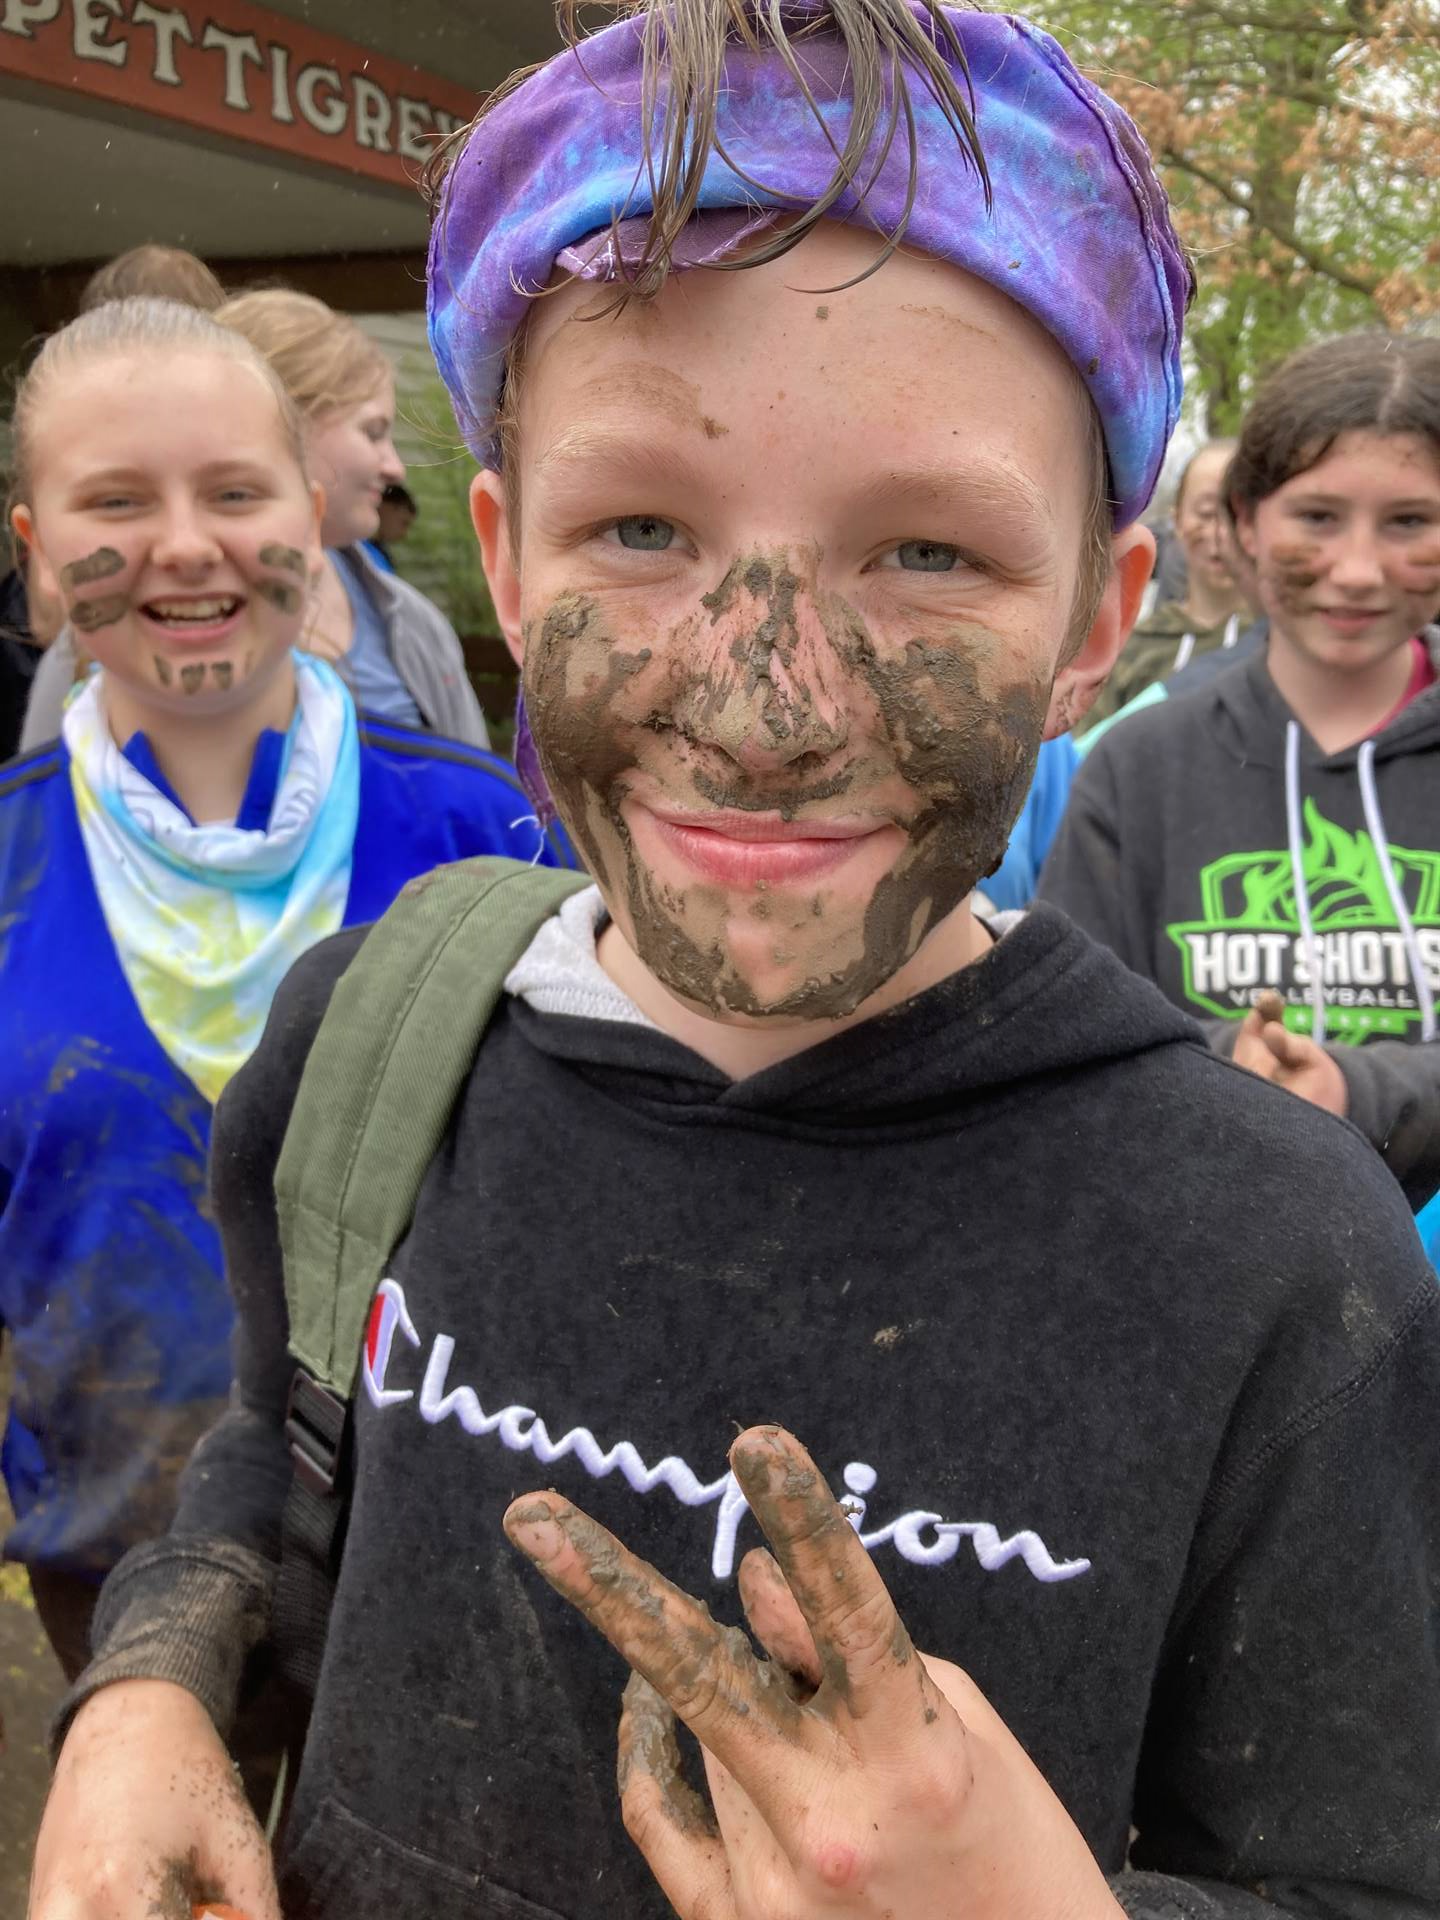 a muddy student face at camp willson